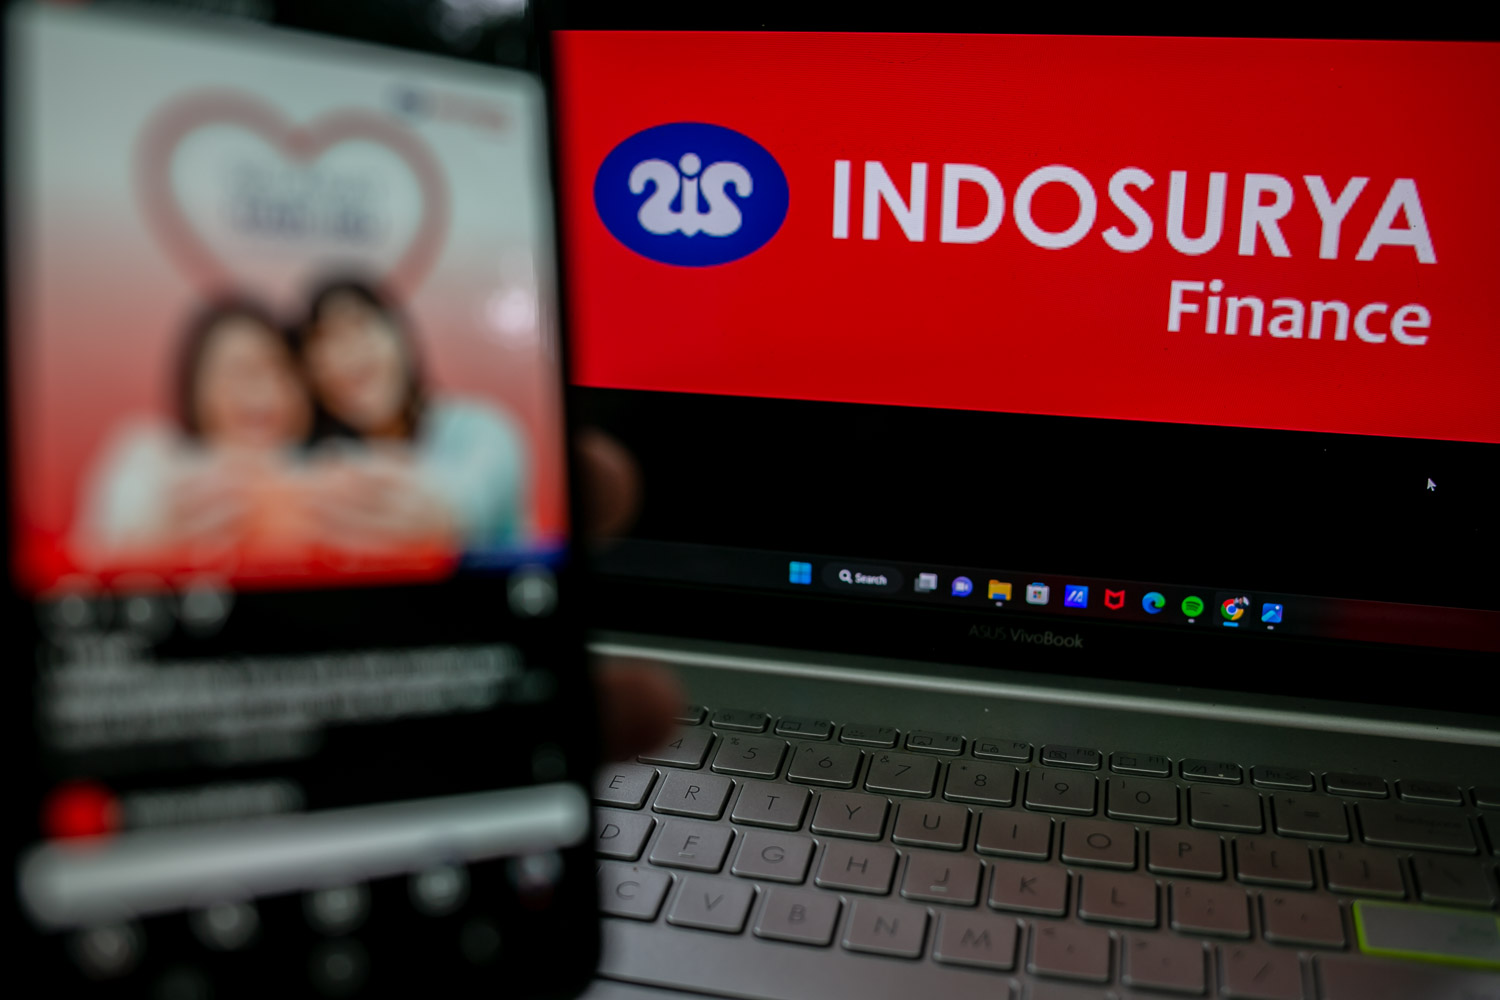 Indosurya Finance